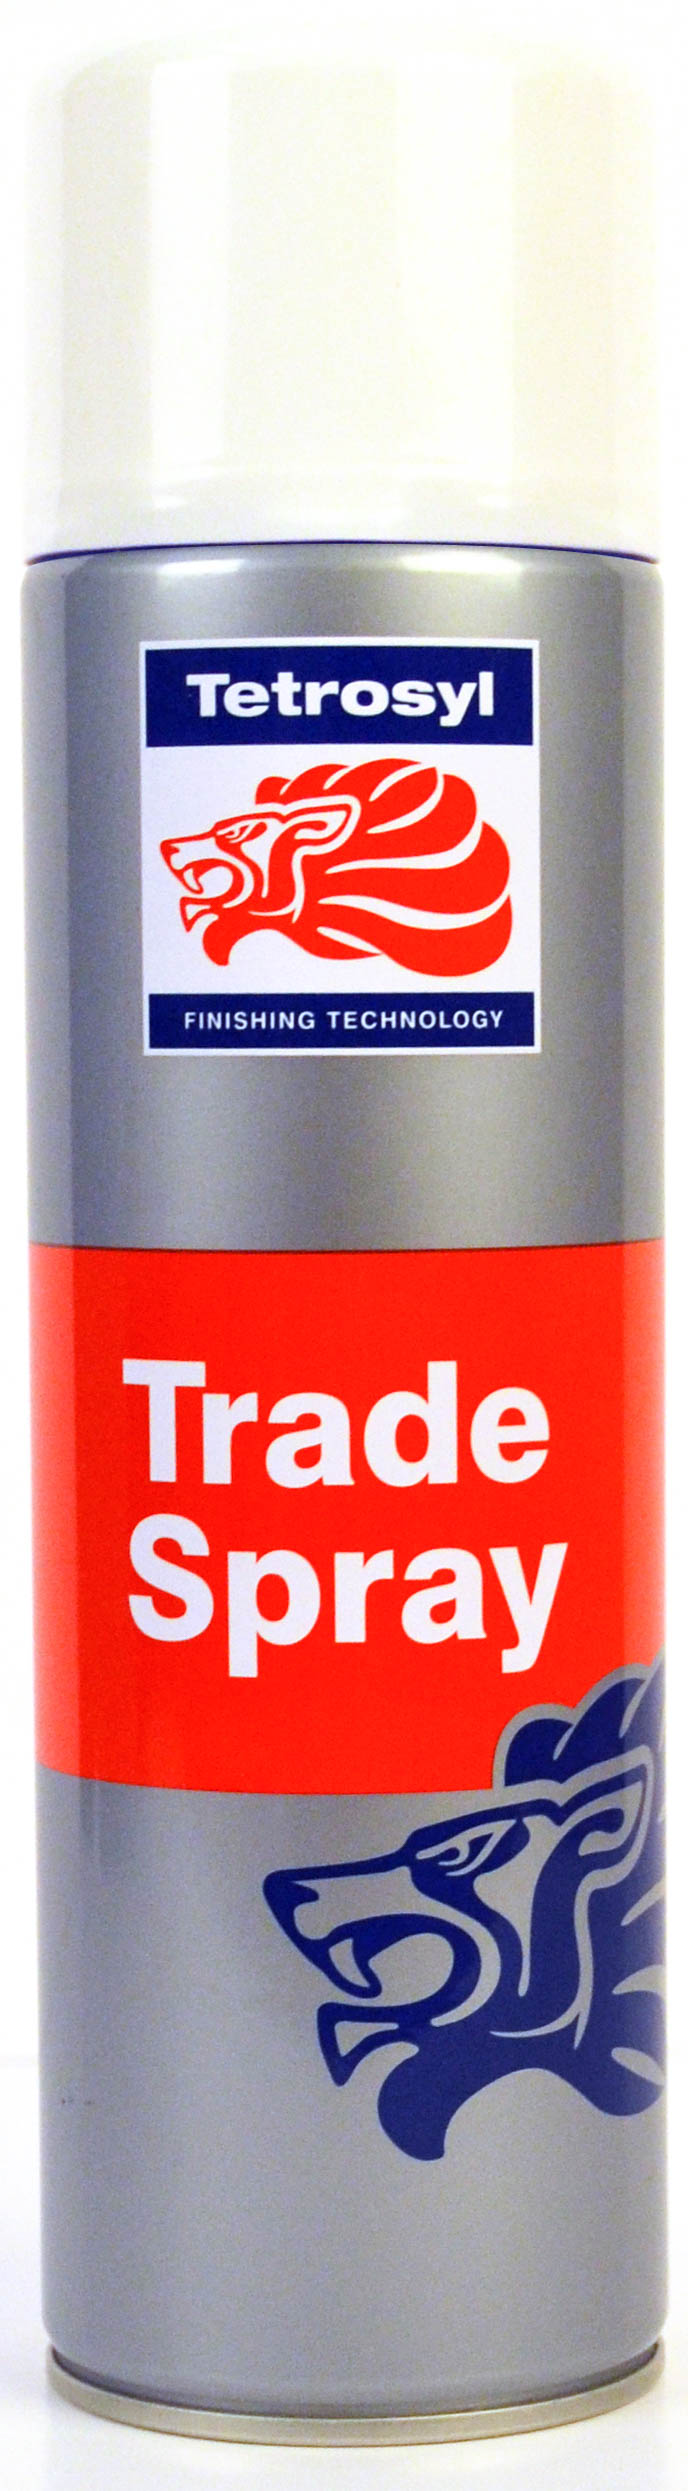 Picture of Tetrosyl Trade Spray Gloss White 500ml